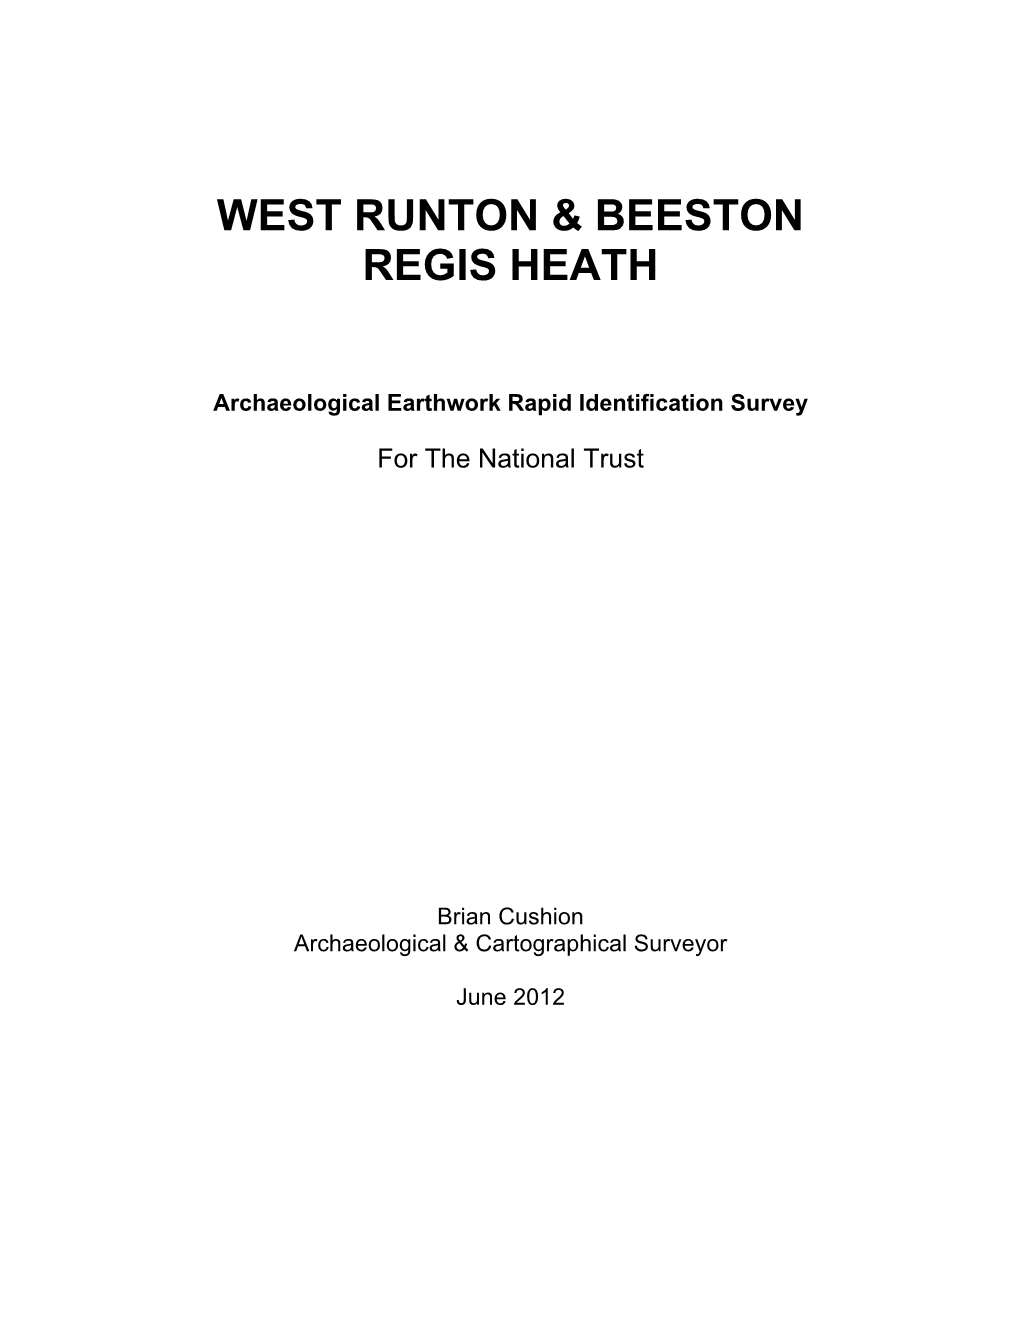 West Runton & Beeston Regis Heath